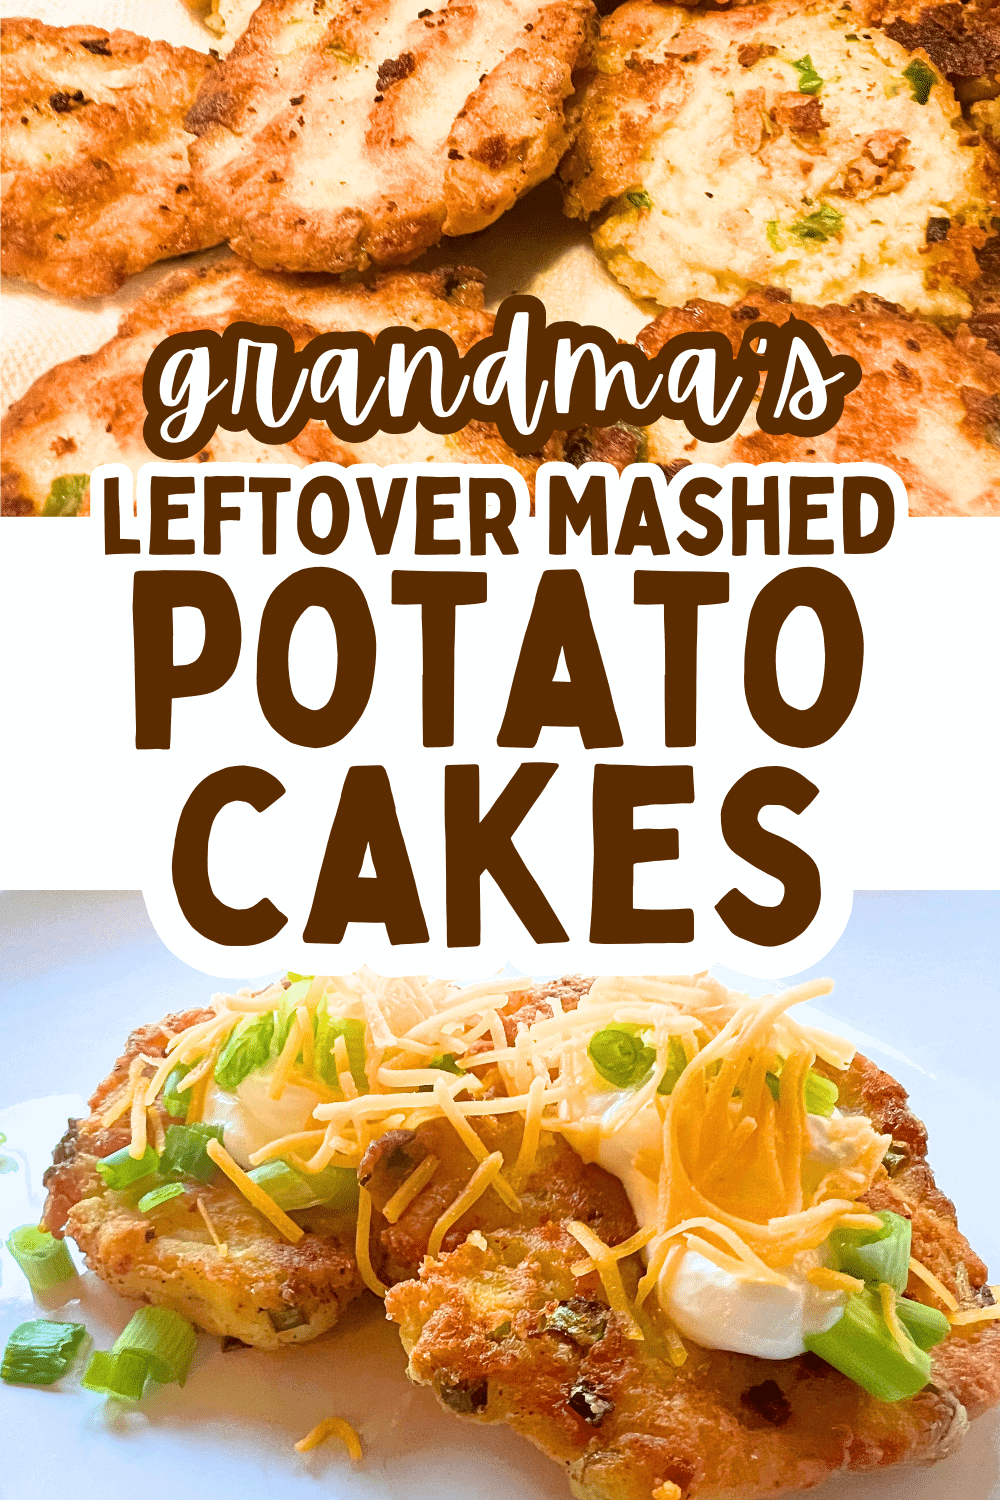 Leftover Mashed Potato Cakes Recipe (From Grandma's Recipes) - text over fried potato cakes